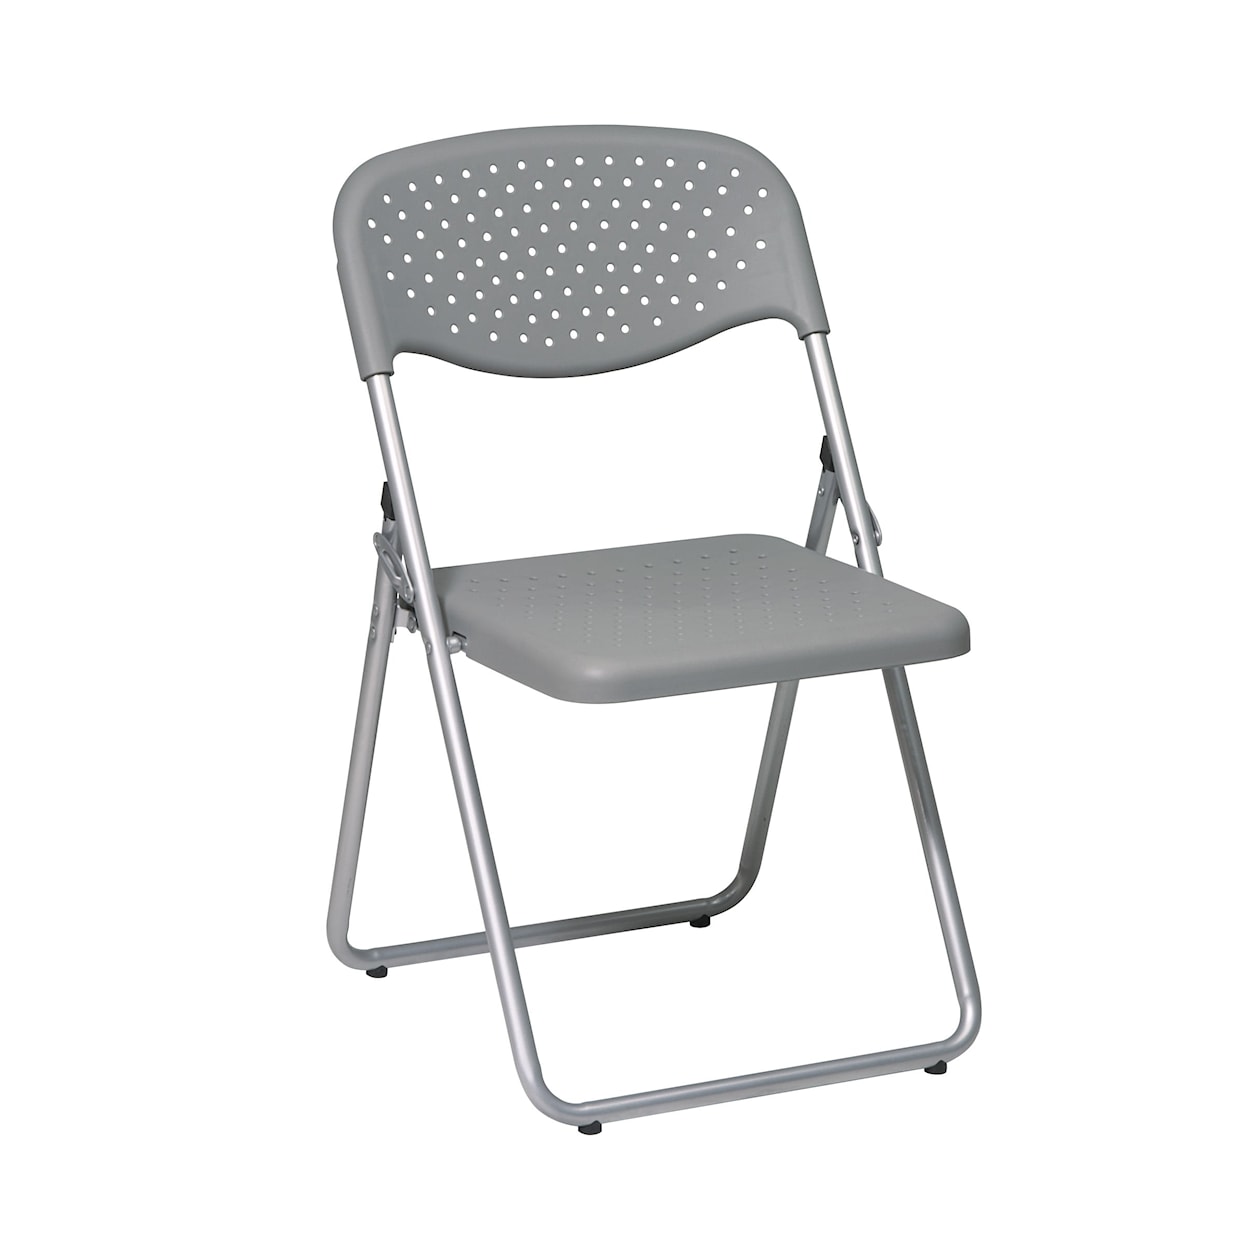 Office Star FC Series Chair